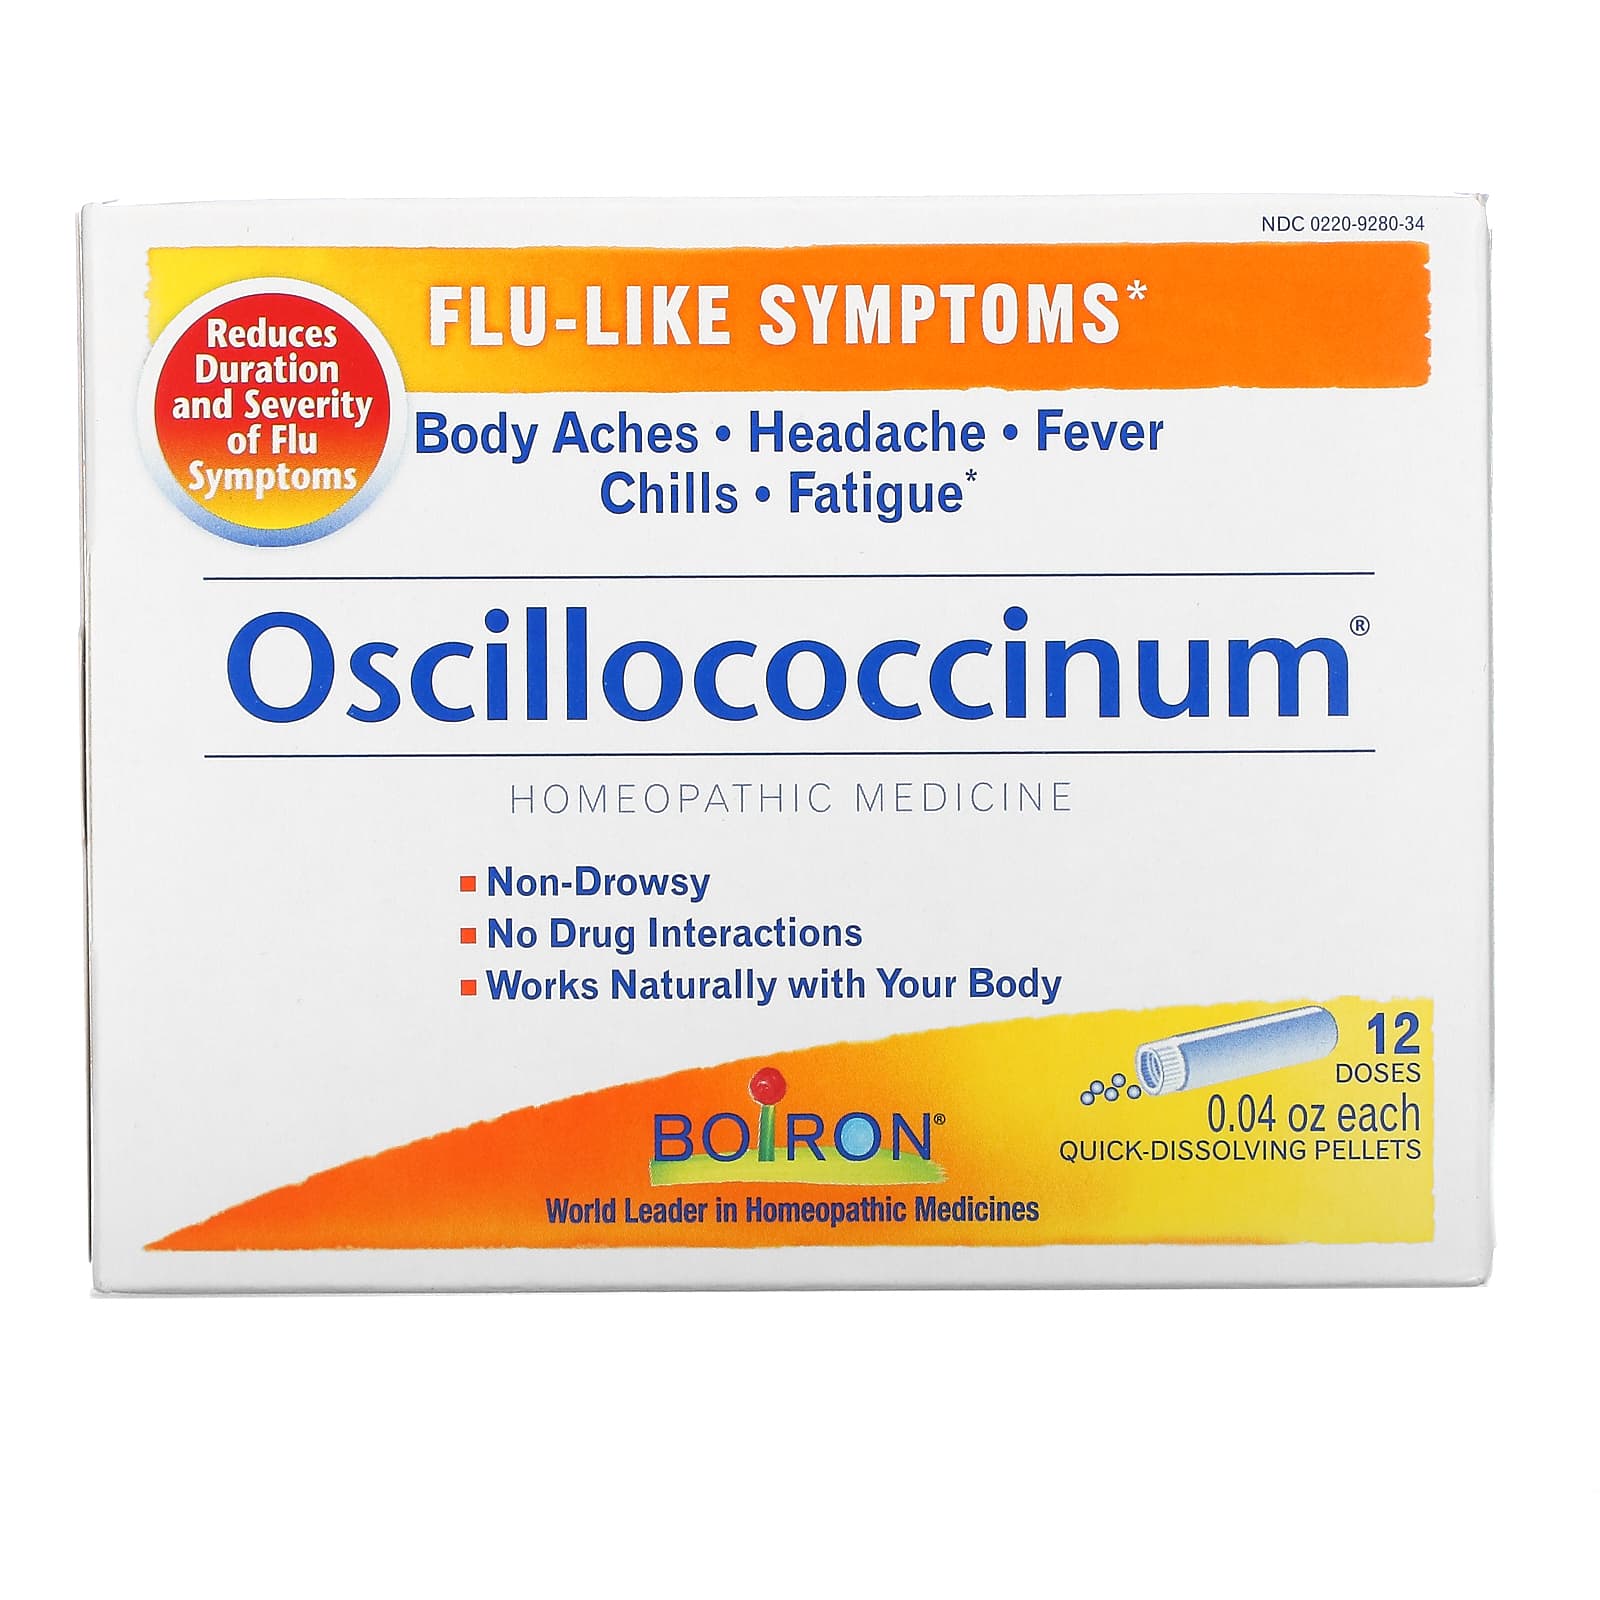 Boiron Oscillococcinum Homeopathic Quick-Dissolving Pellets, For Flu-Like Symptoms, 12 Doses